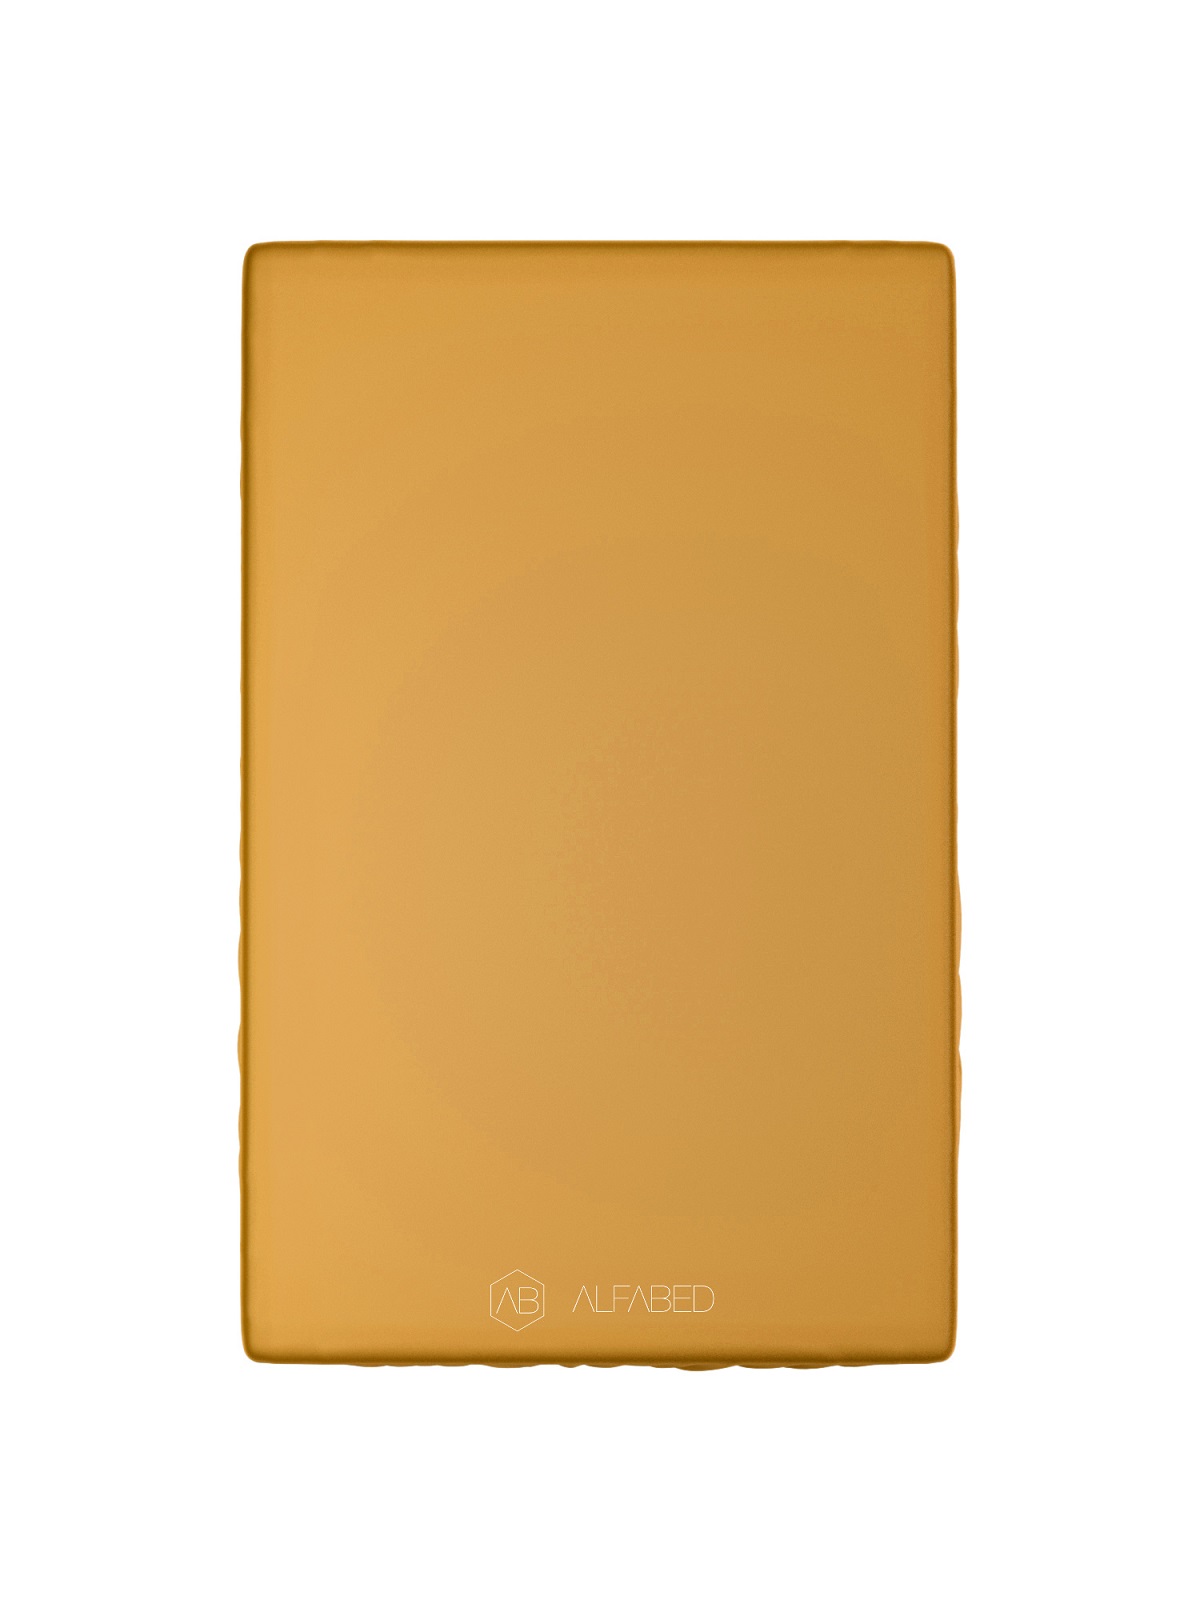 Pillow Top Fitted Sheet Royal Cotton Sateen Honey H-51